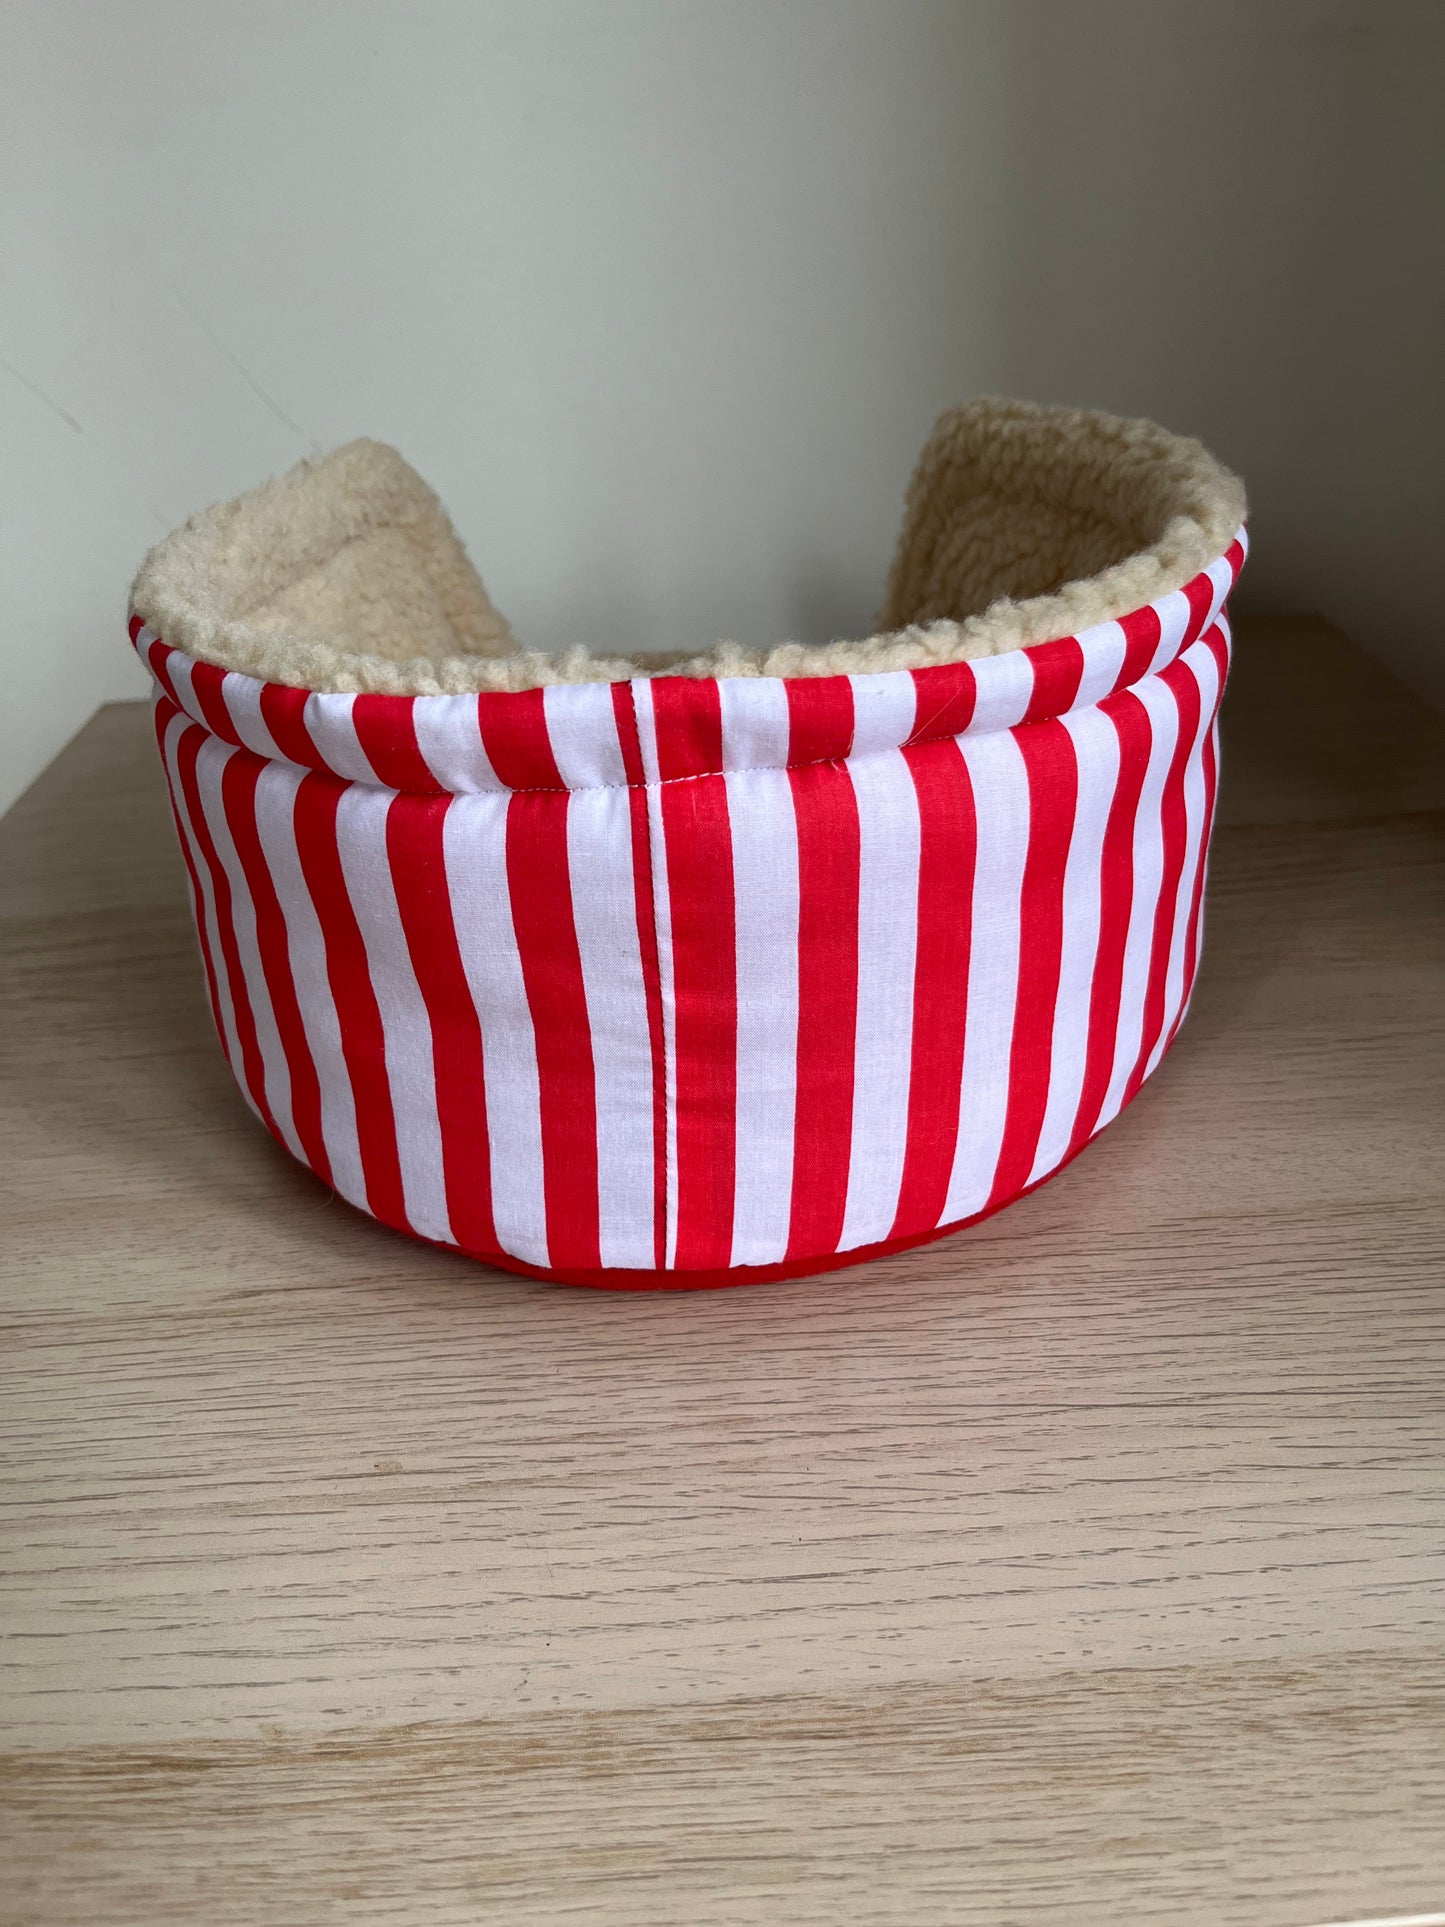 Popcorn Cuddle Cup - Guinea Pig Bed/Hide